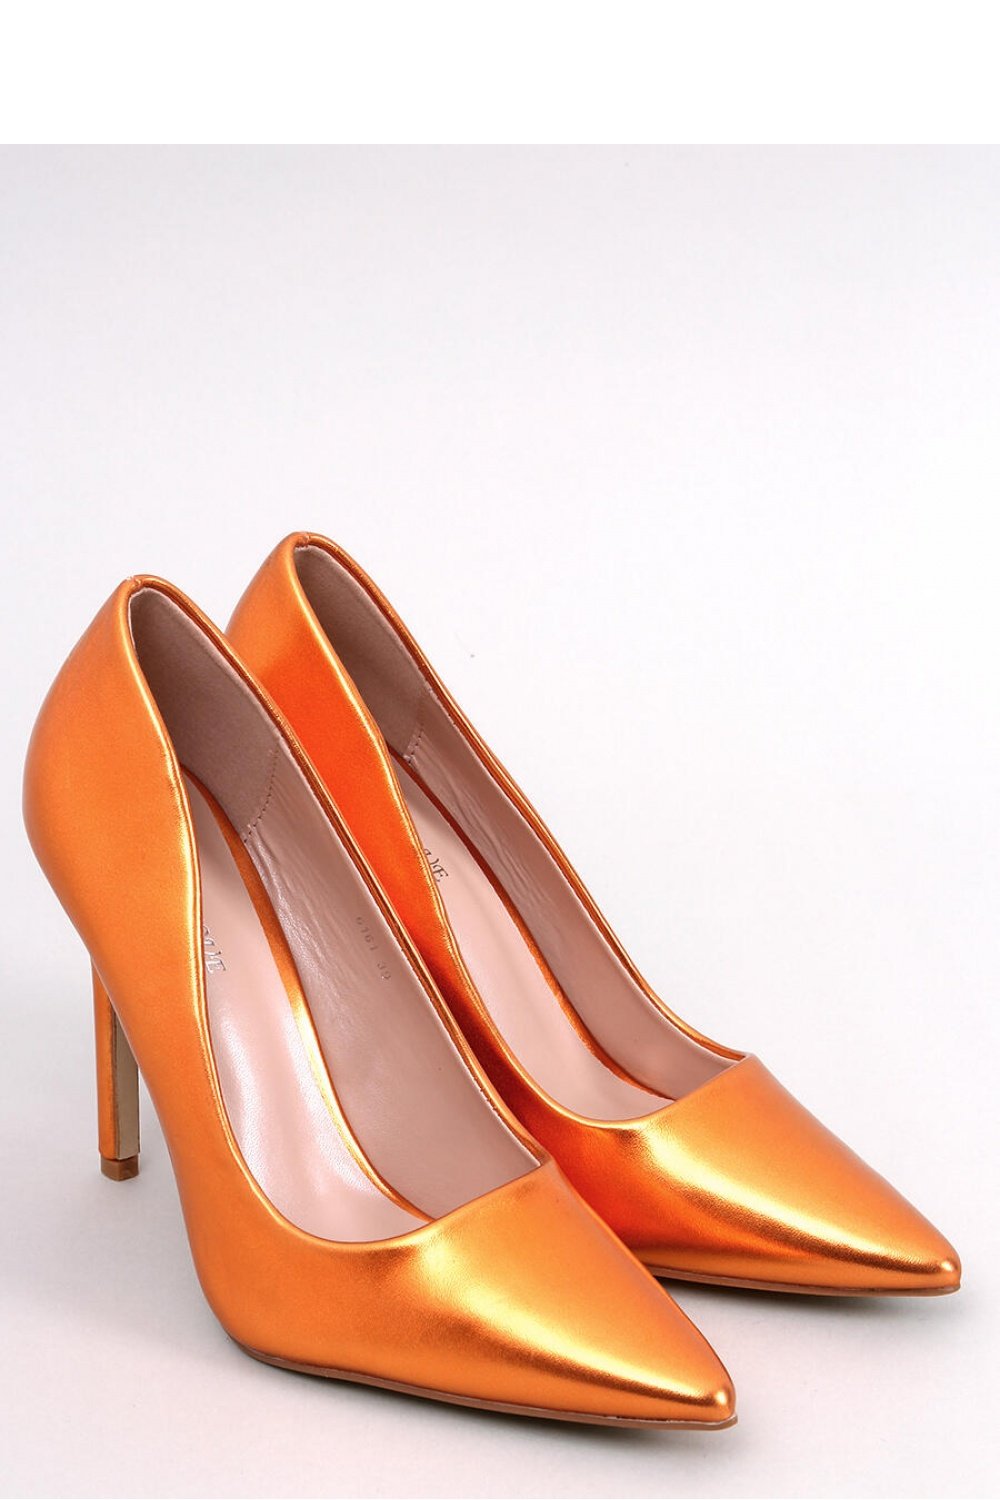 High heels model 184275 Inello Posh Styles Apparel